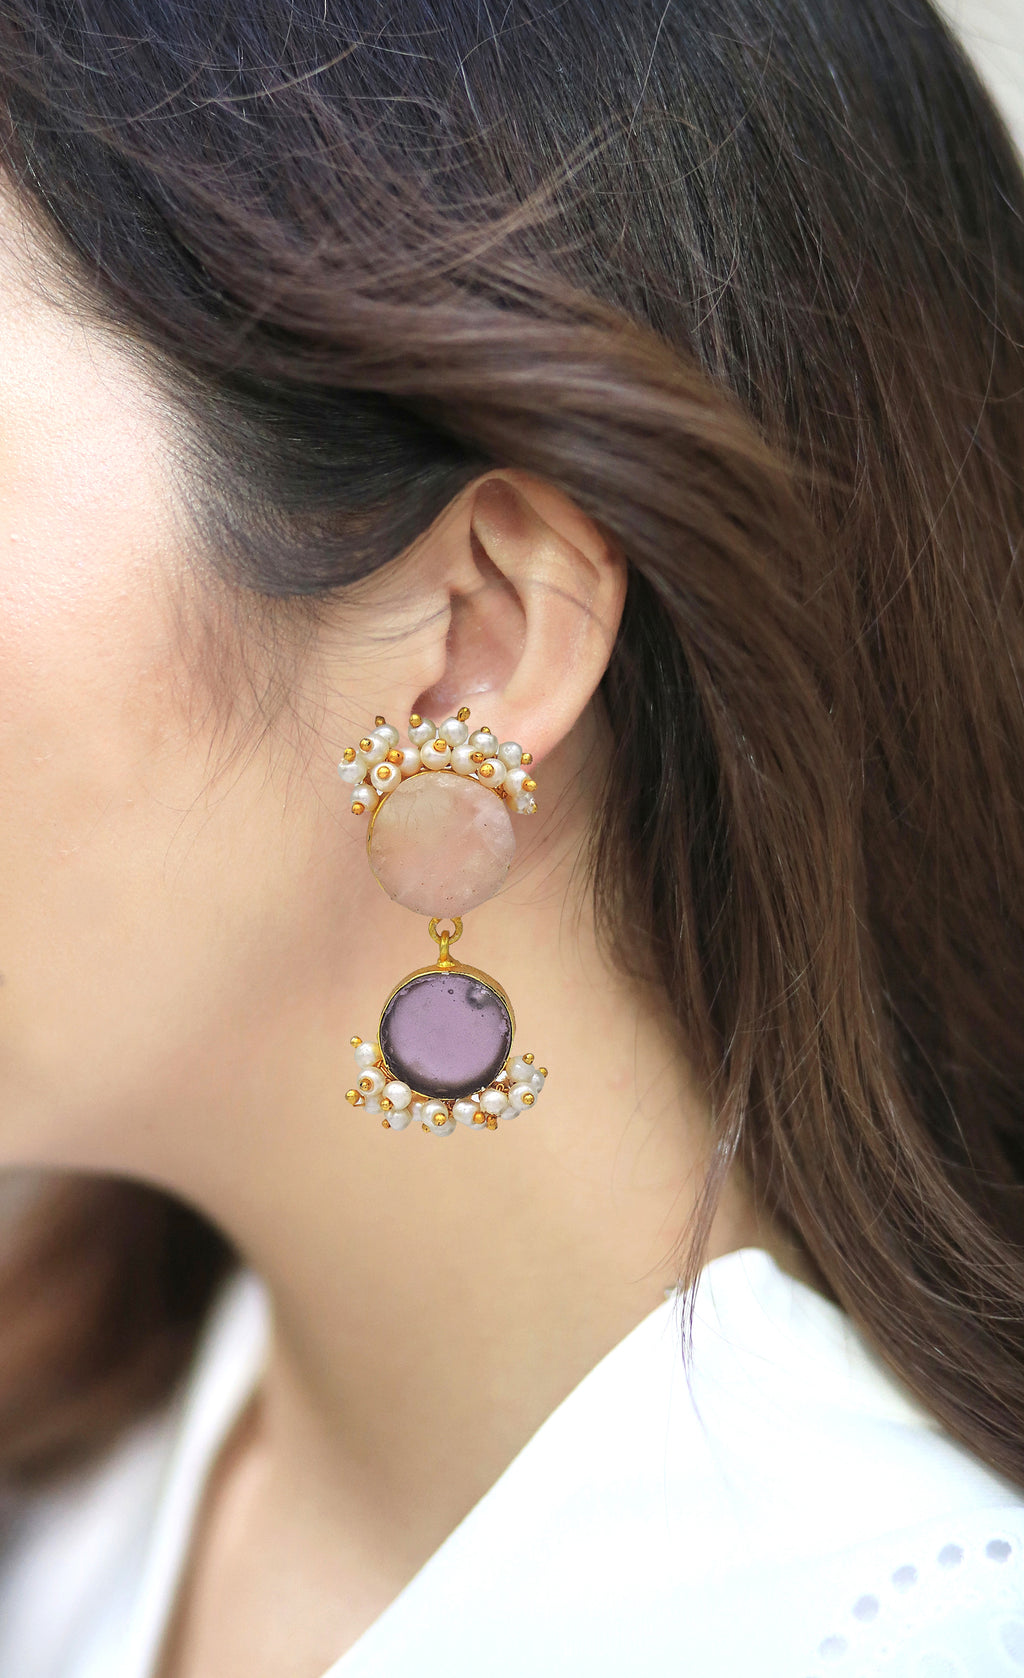 Twin Bloom Earrings (Rose Quartz & Amethyst) - Statement Earrings - Gold-Plated & Hypoallergenic - Made in India - Dubai Jewellery - Dori